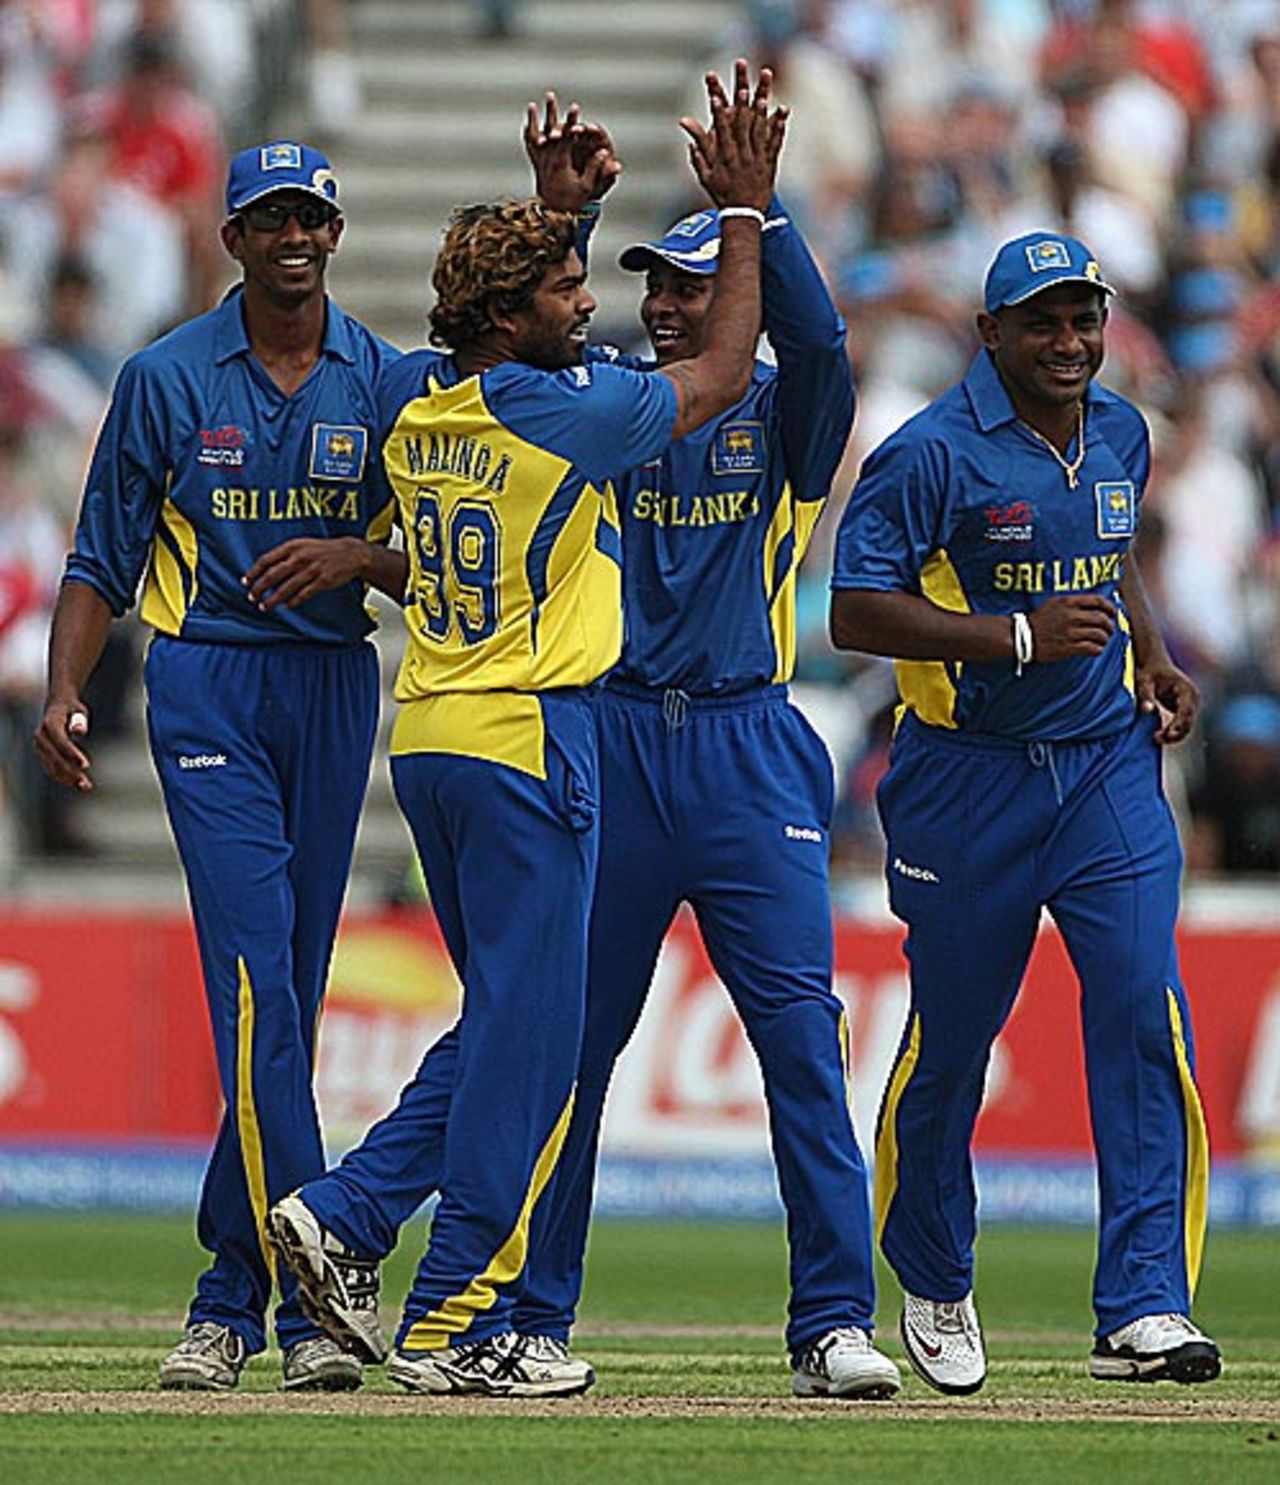 Lasith Malinga got rid of Aaron Redmond, New Zealand v Sri Lanka, ICC World Twenty20 Super Eights, Trent Bridge, June 16, 2009 